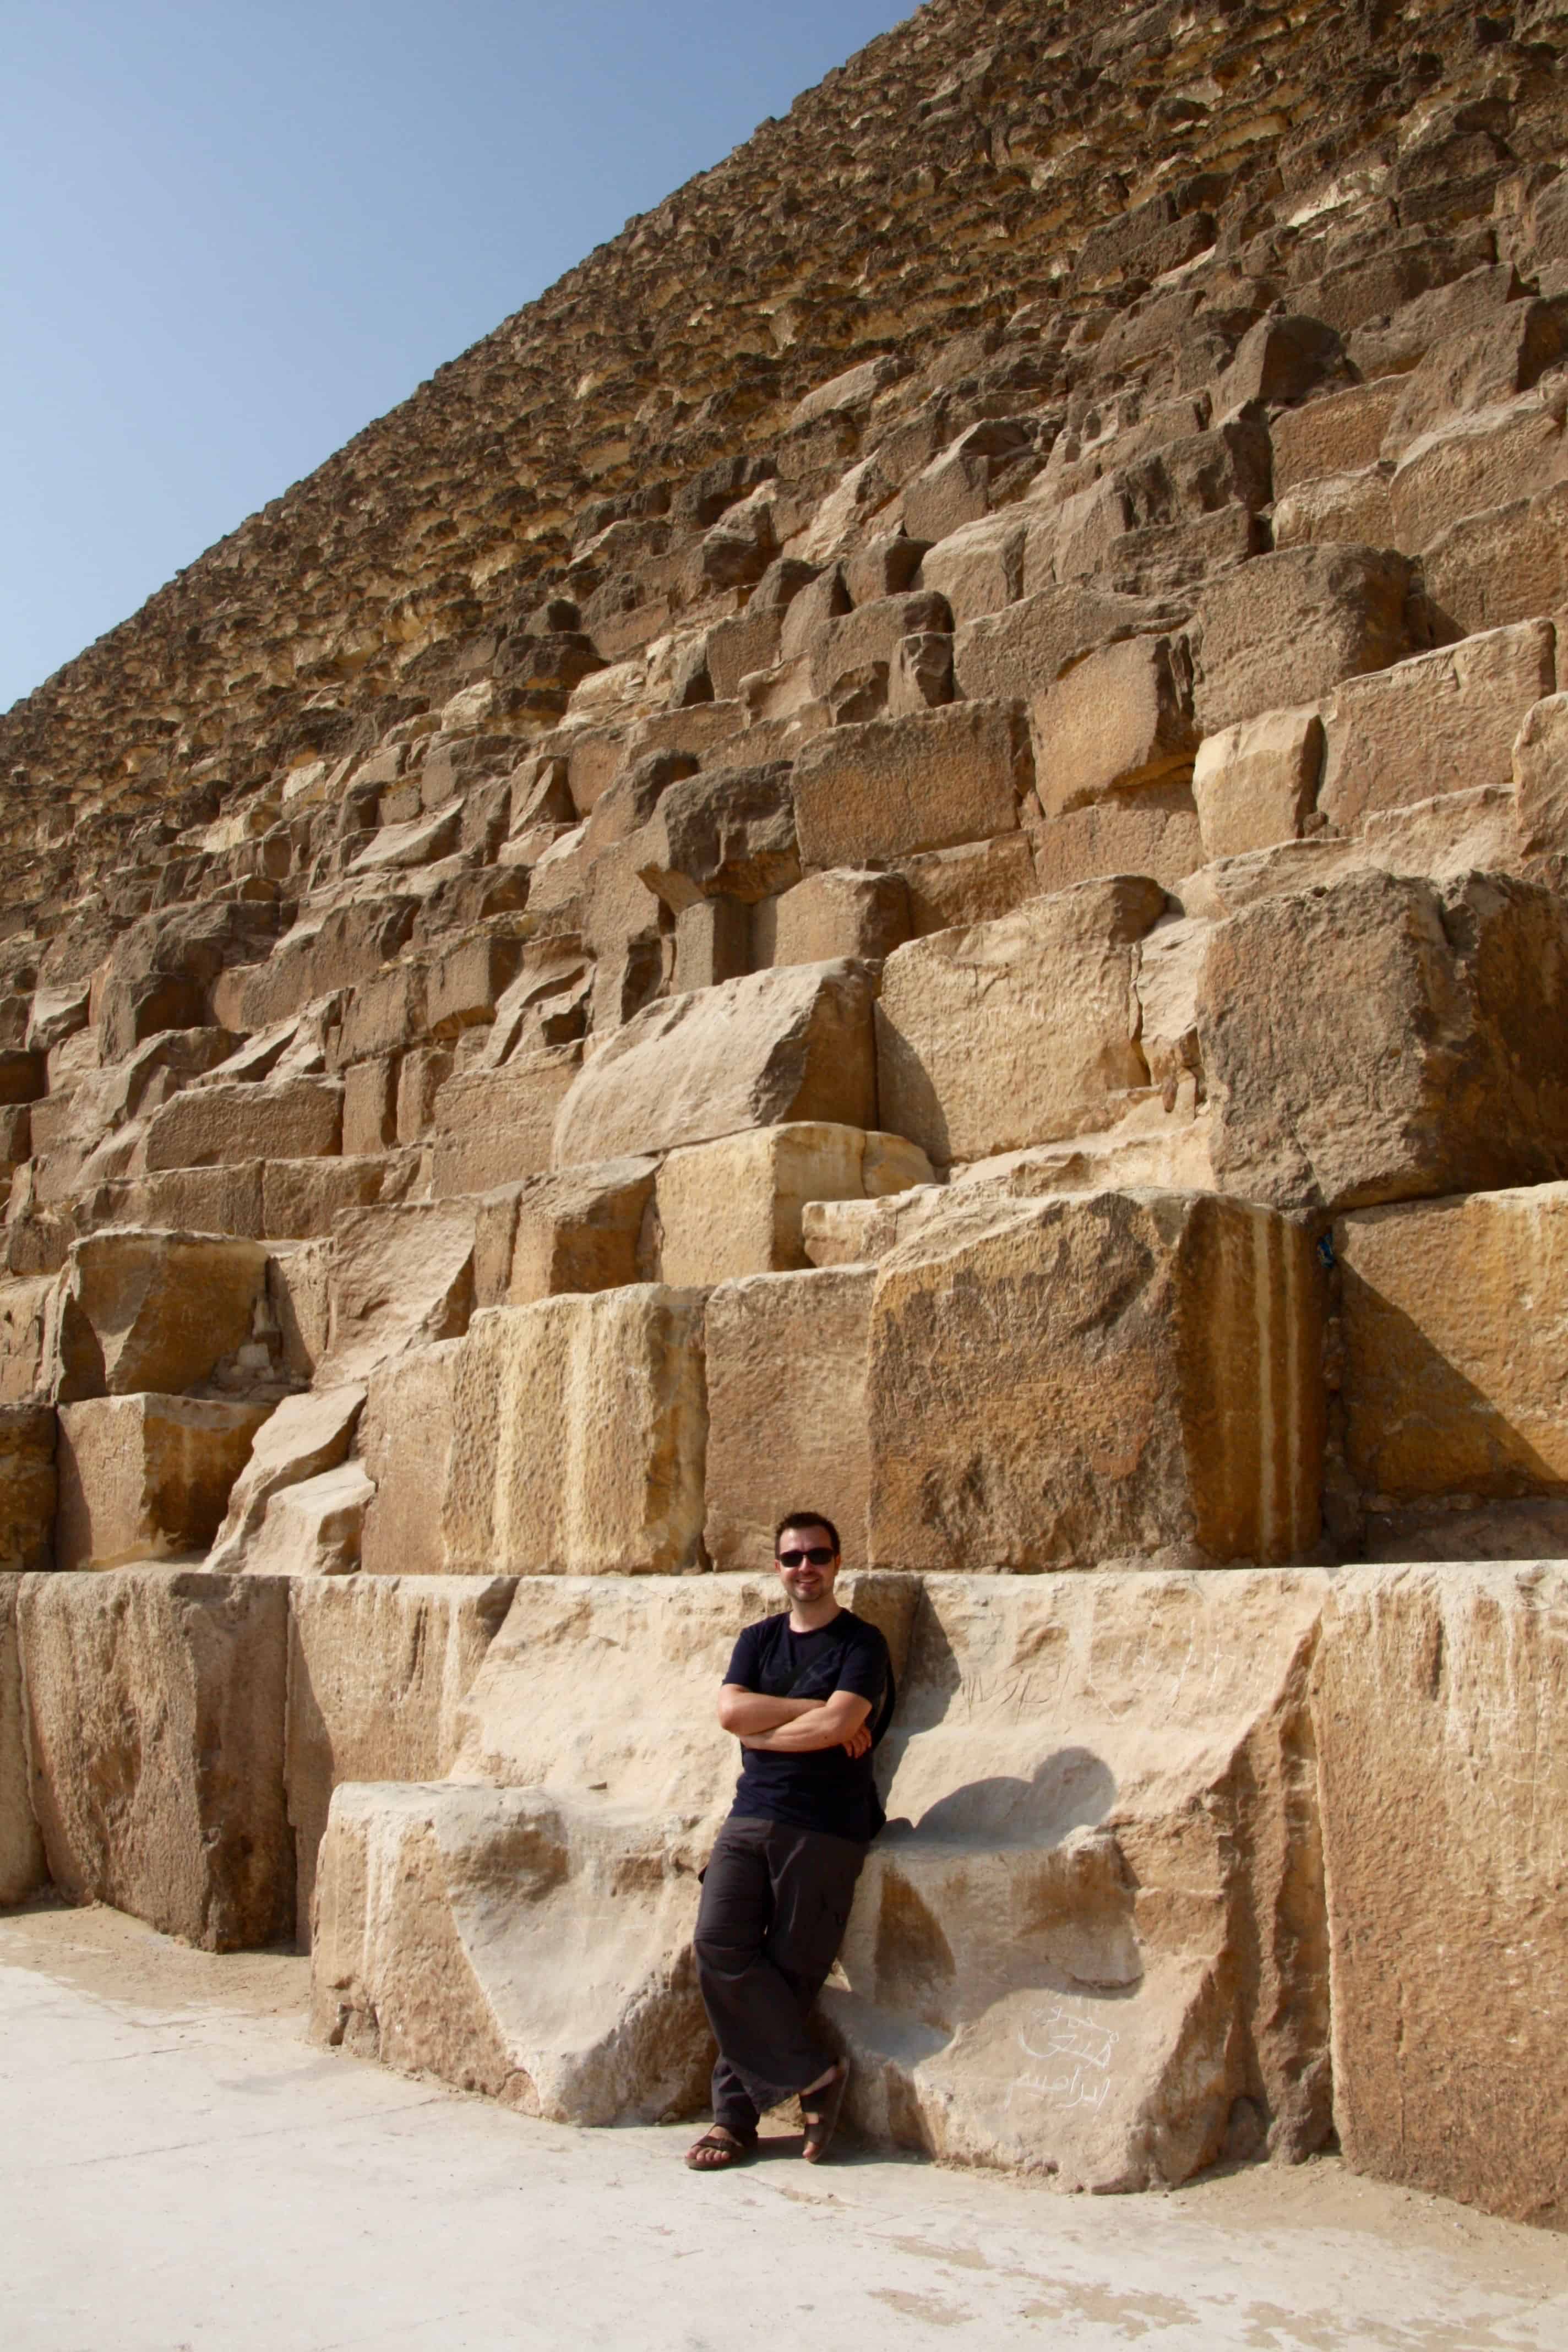 Giant stone blocks of the Great Pyramid at Giza, Egypt